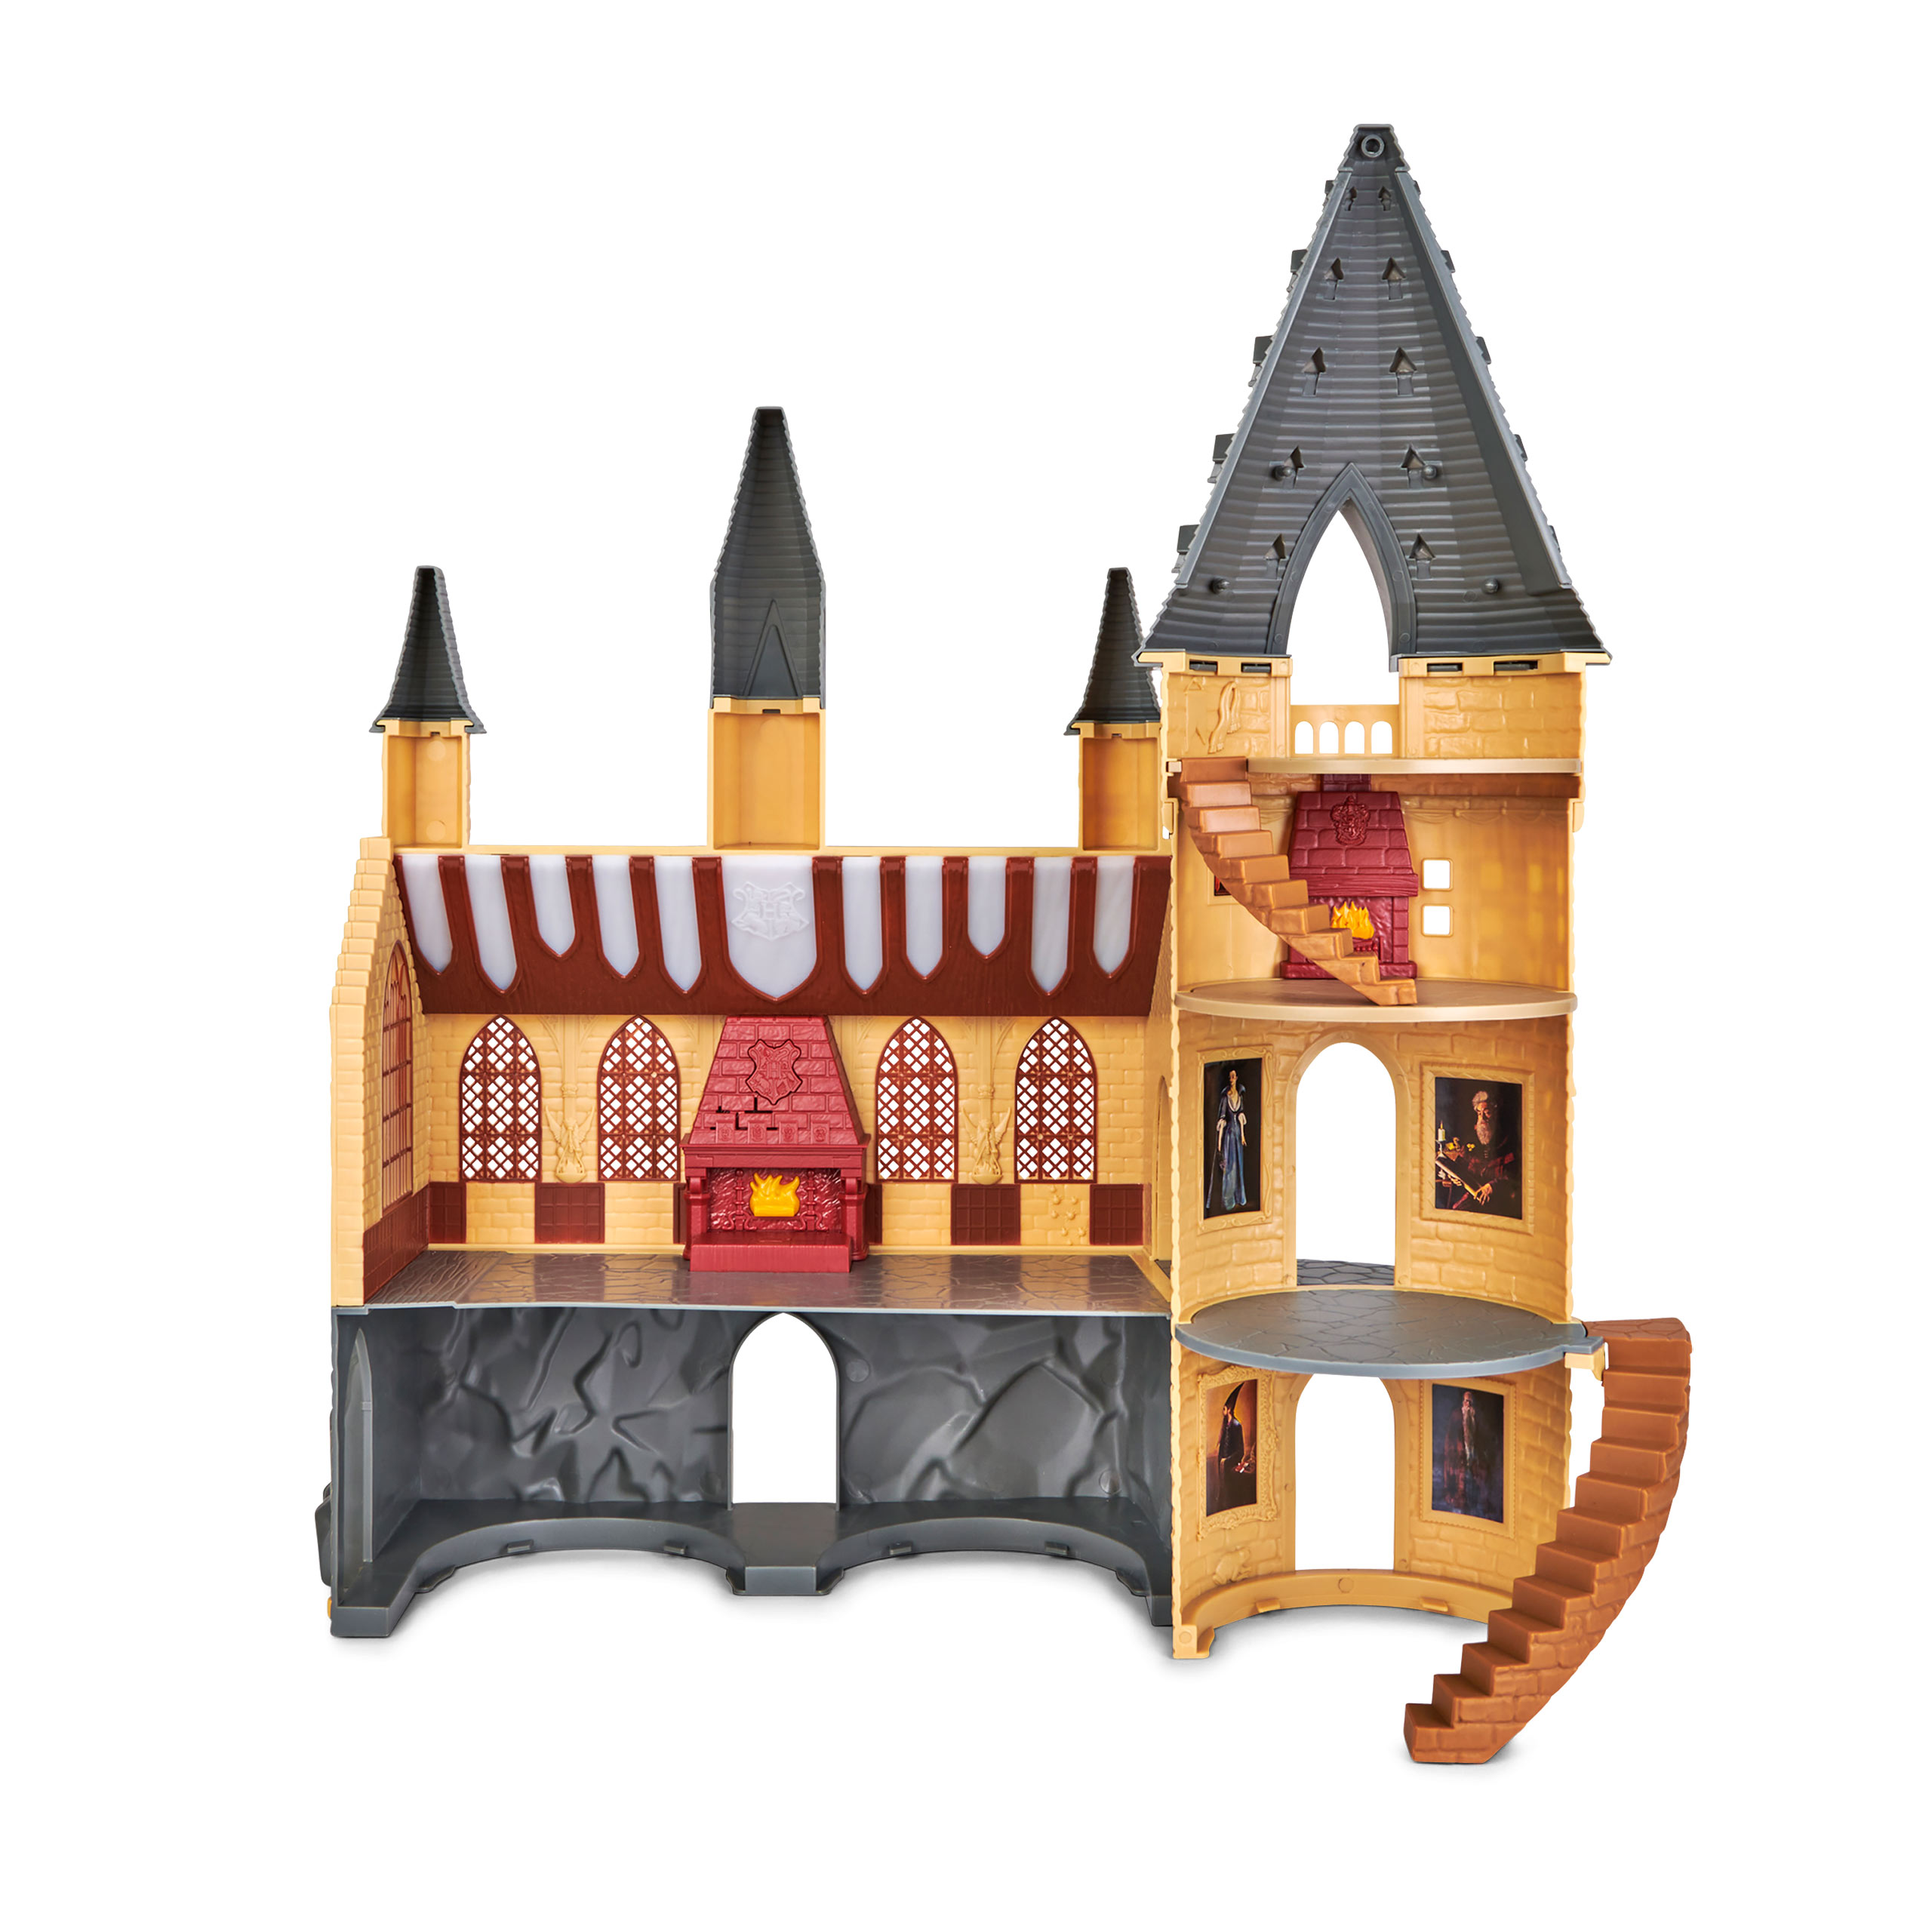 Harry Potter - Hogwarts Castle Playset